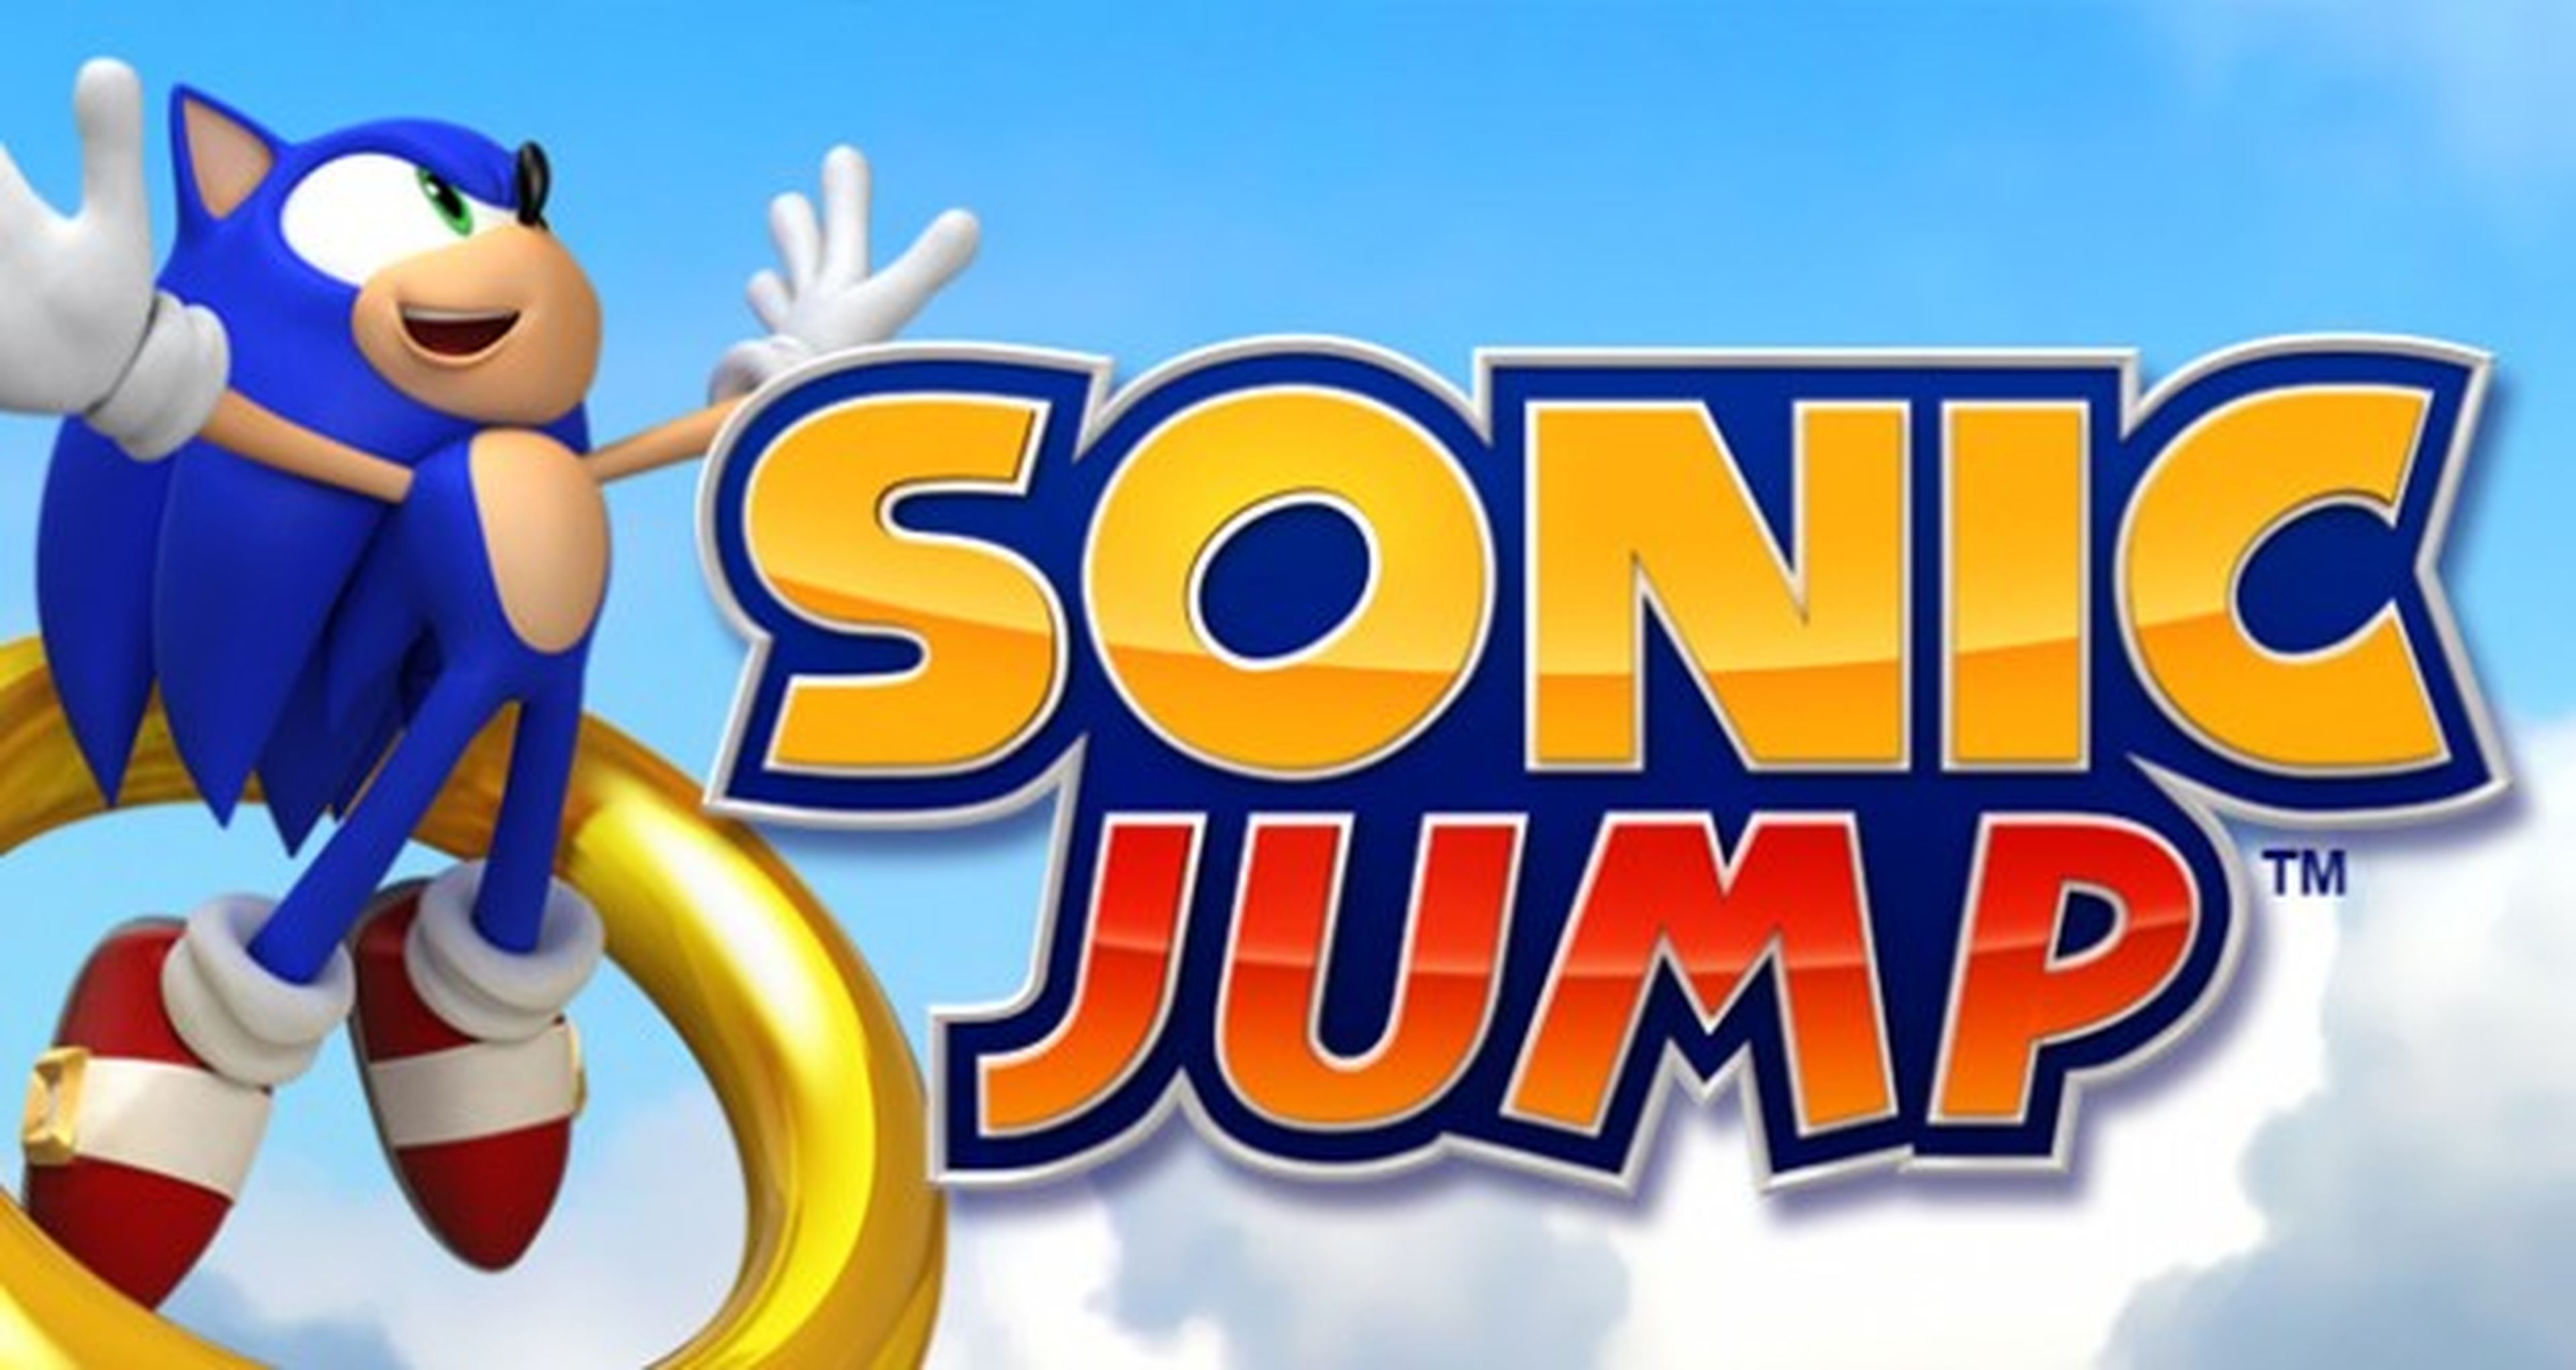 Sonic Jump gratis para iPhone, iPad e iPod Touch